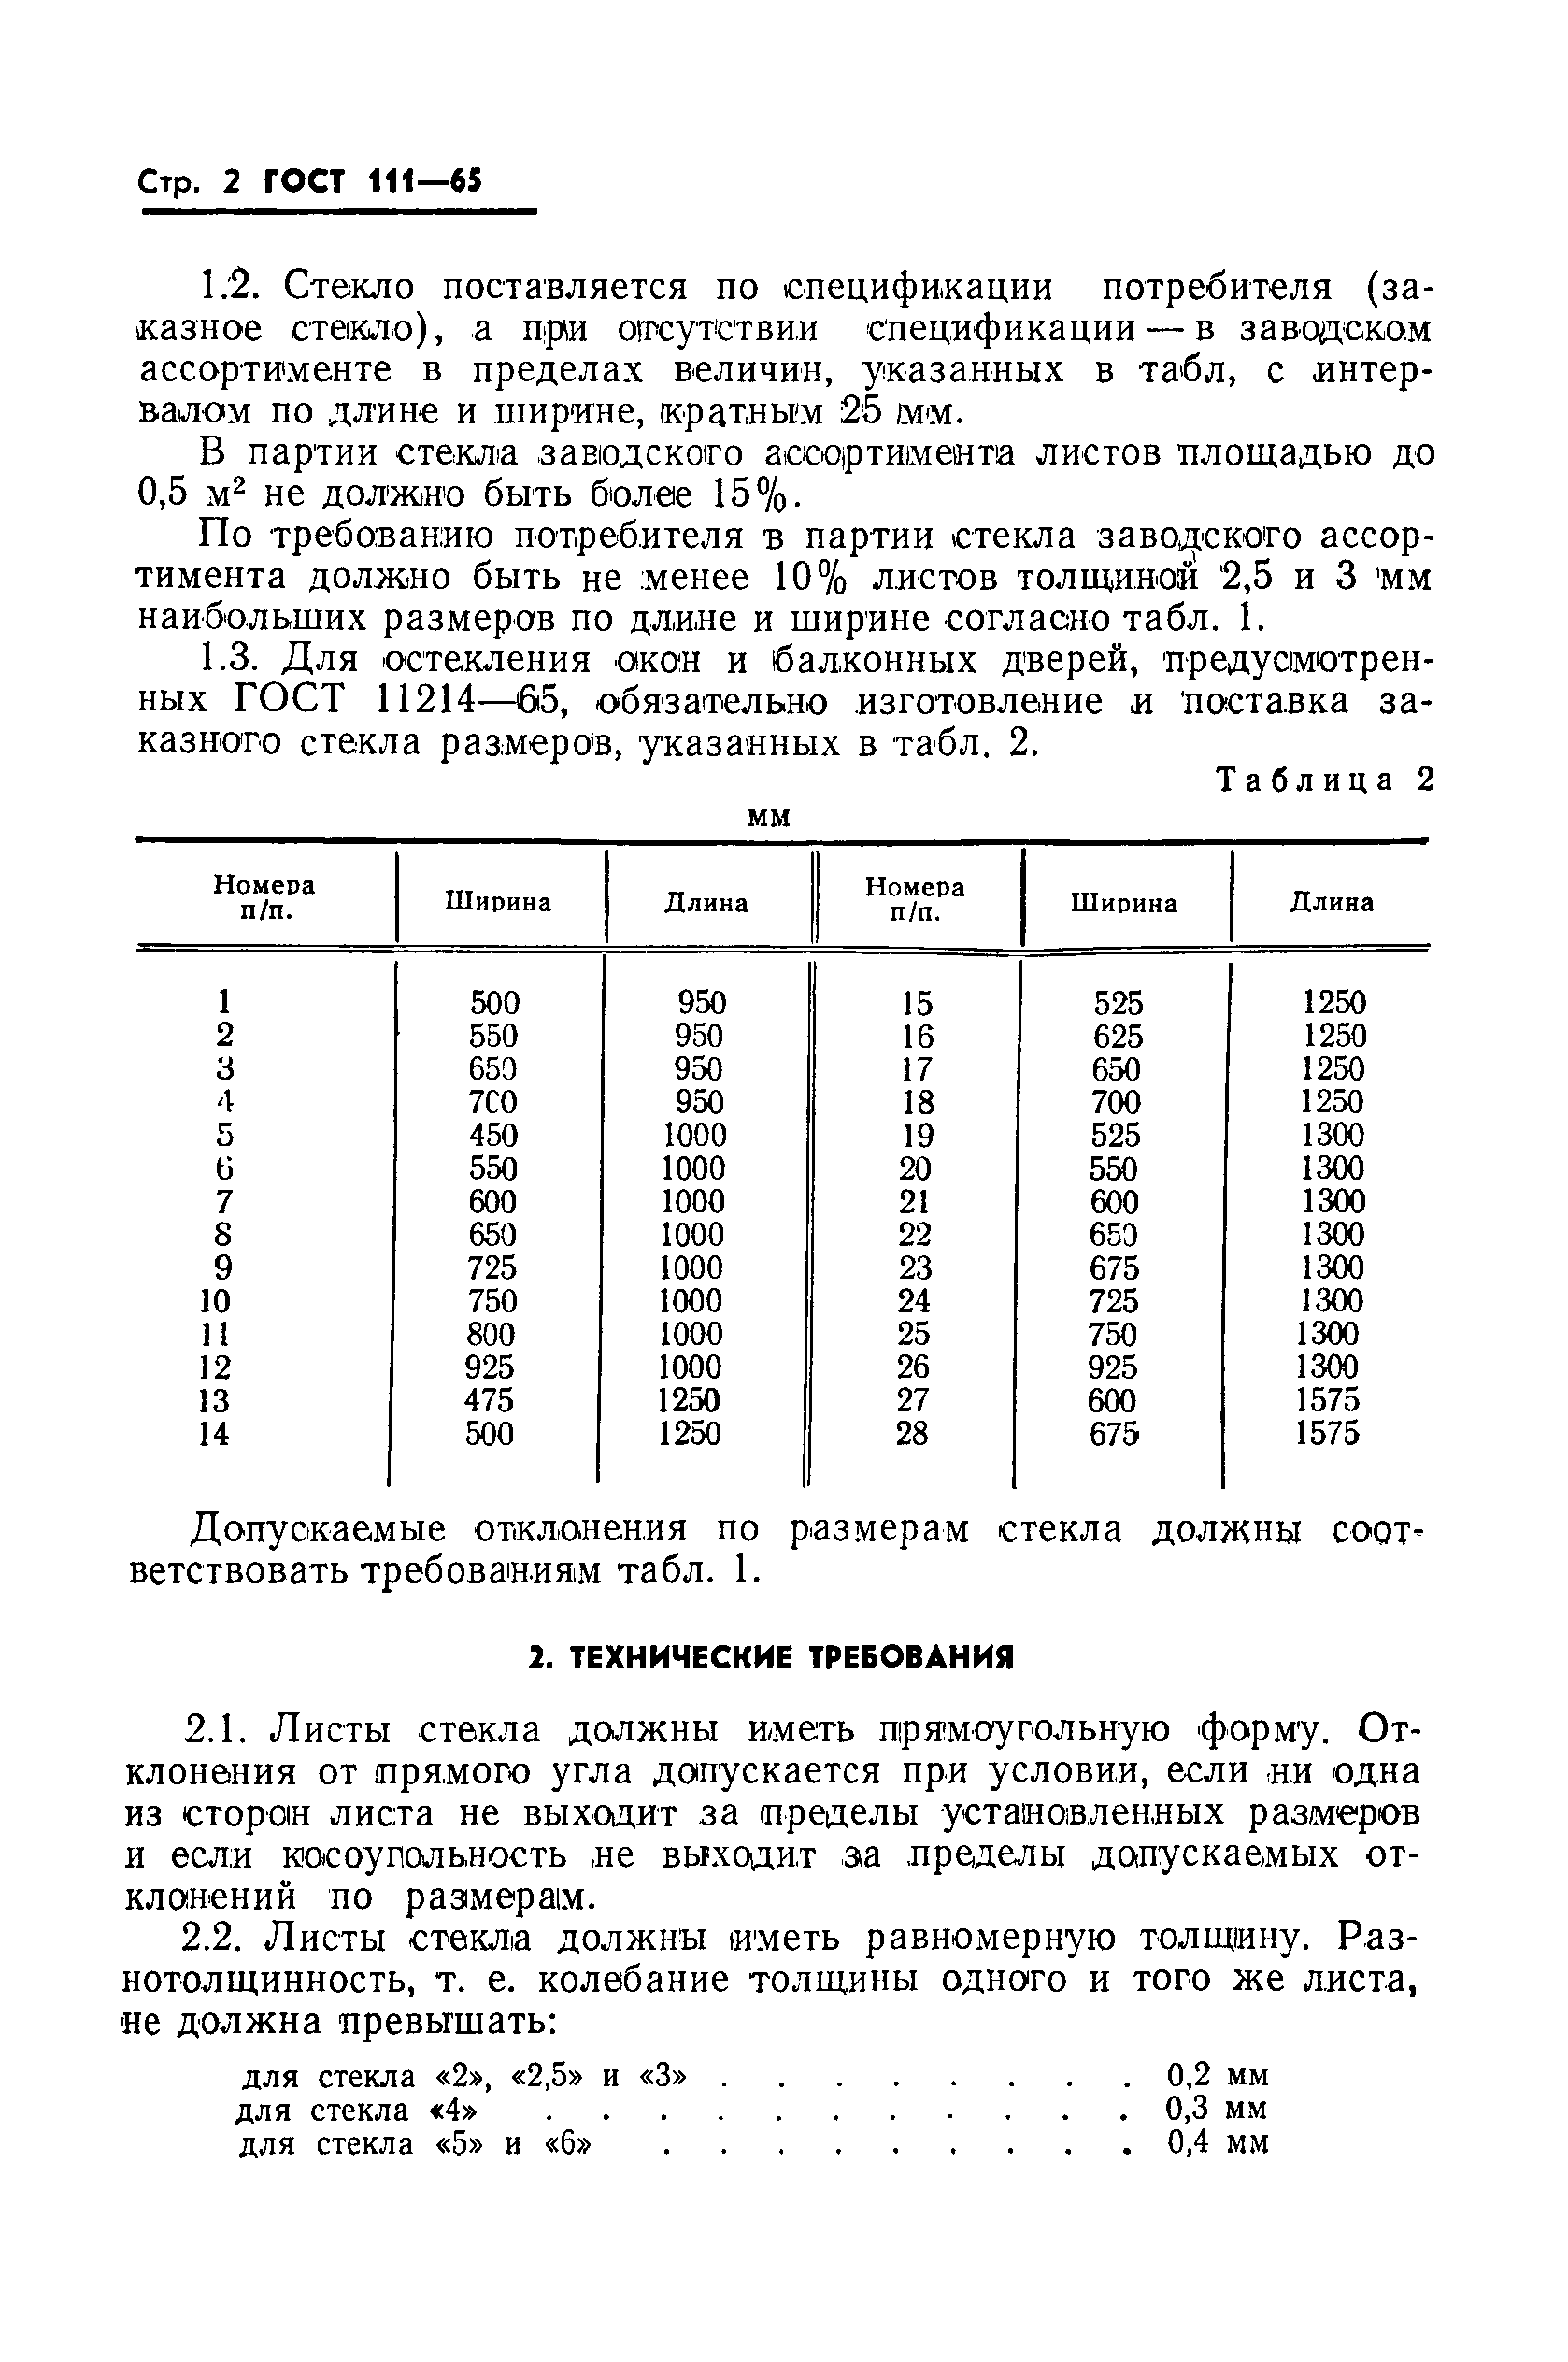 ГОСТ 111-65